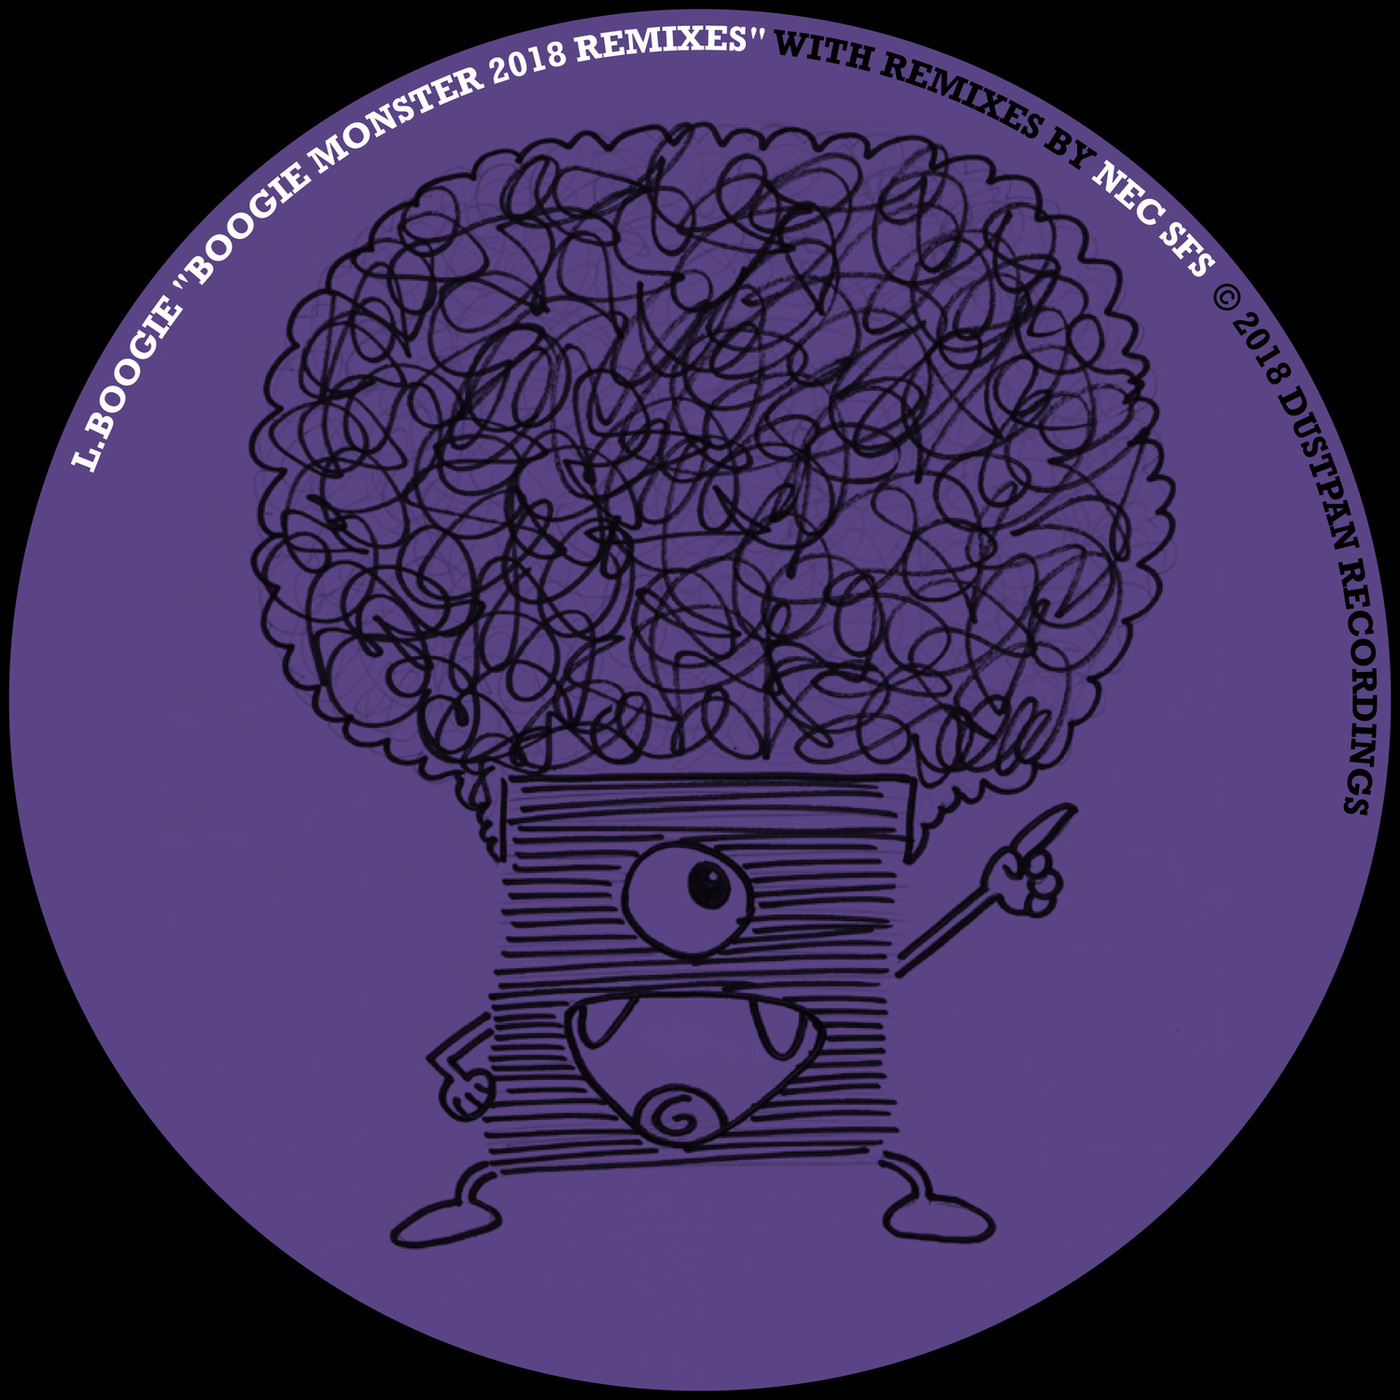 L.Boogie - Boogie Monster 2018 Remixes / Dustpan Recordings